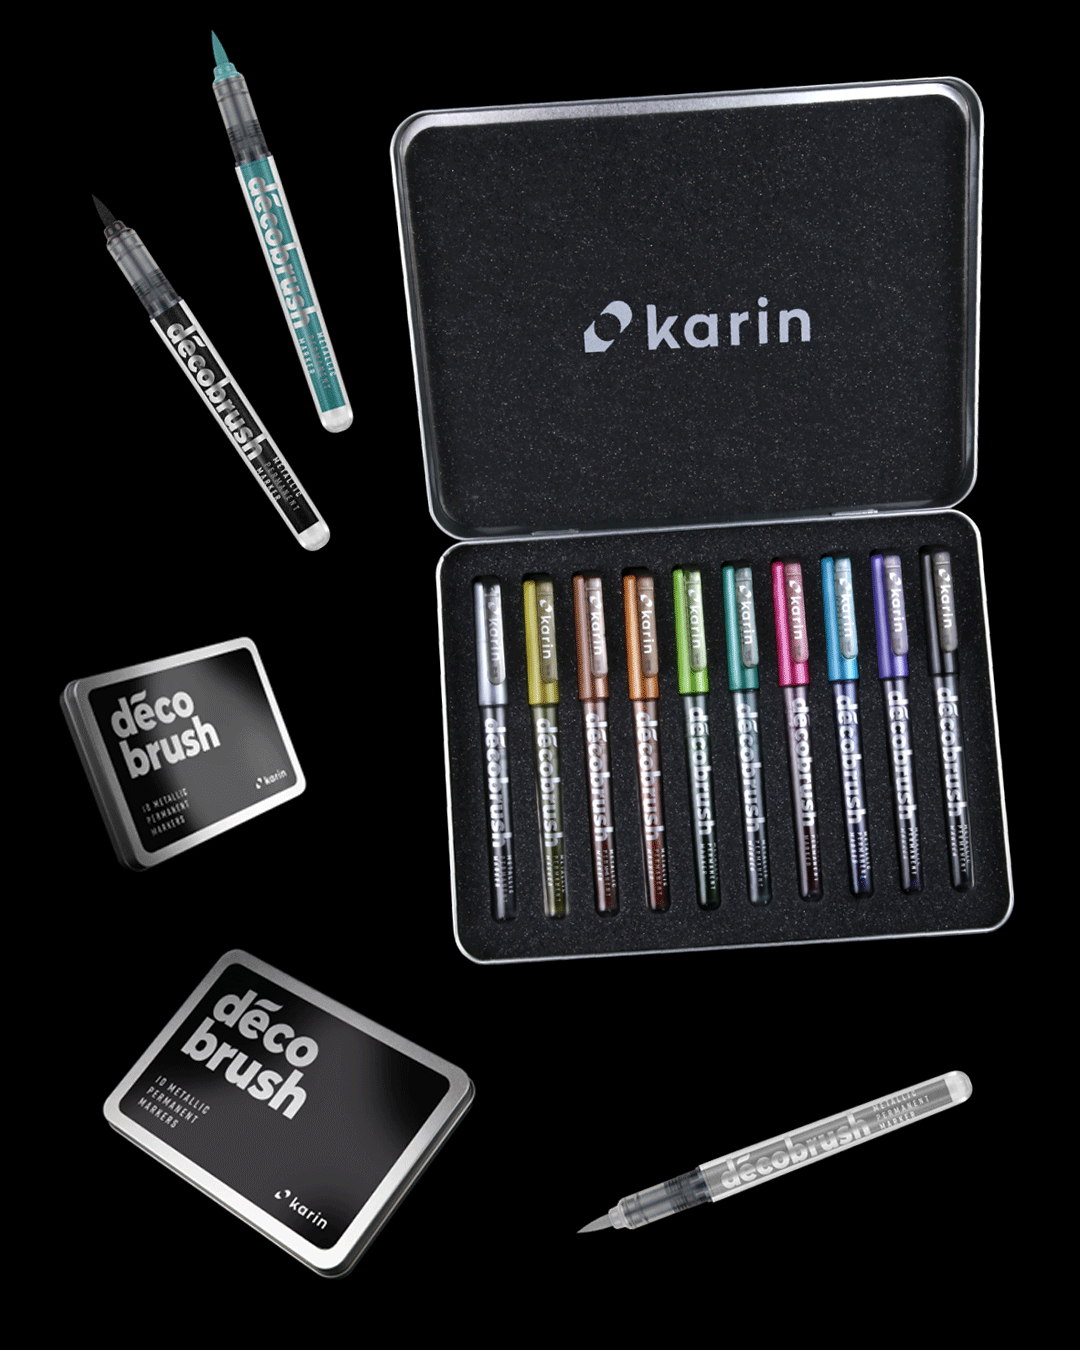 karin — Global Creative, Inc.